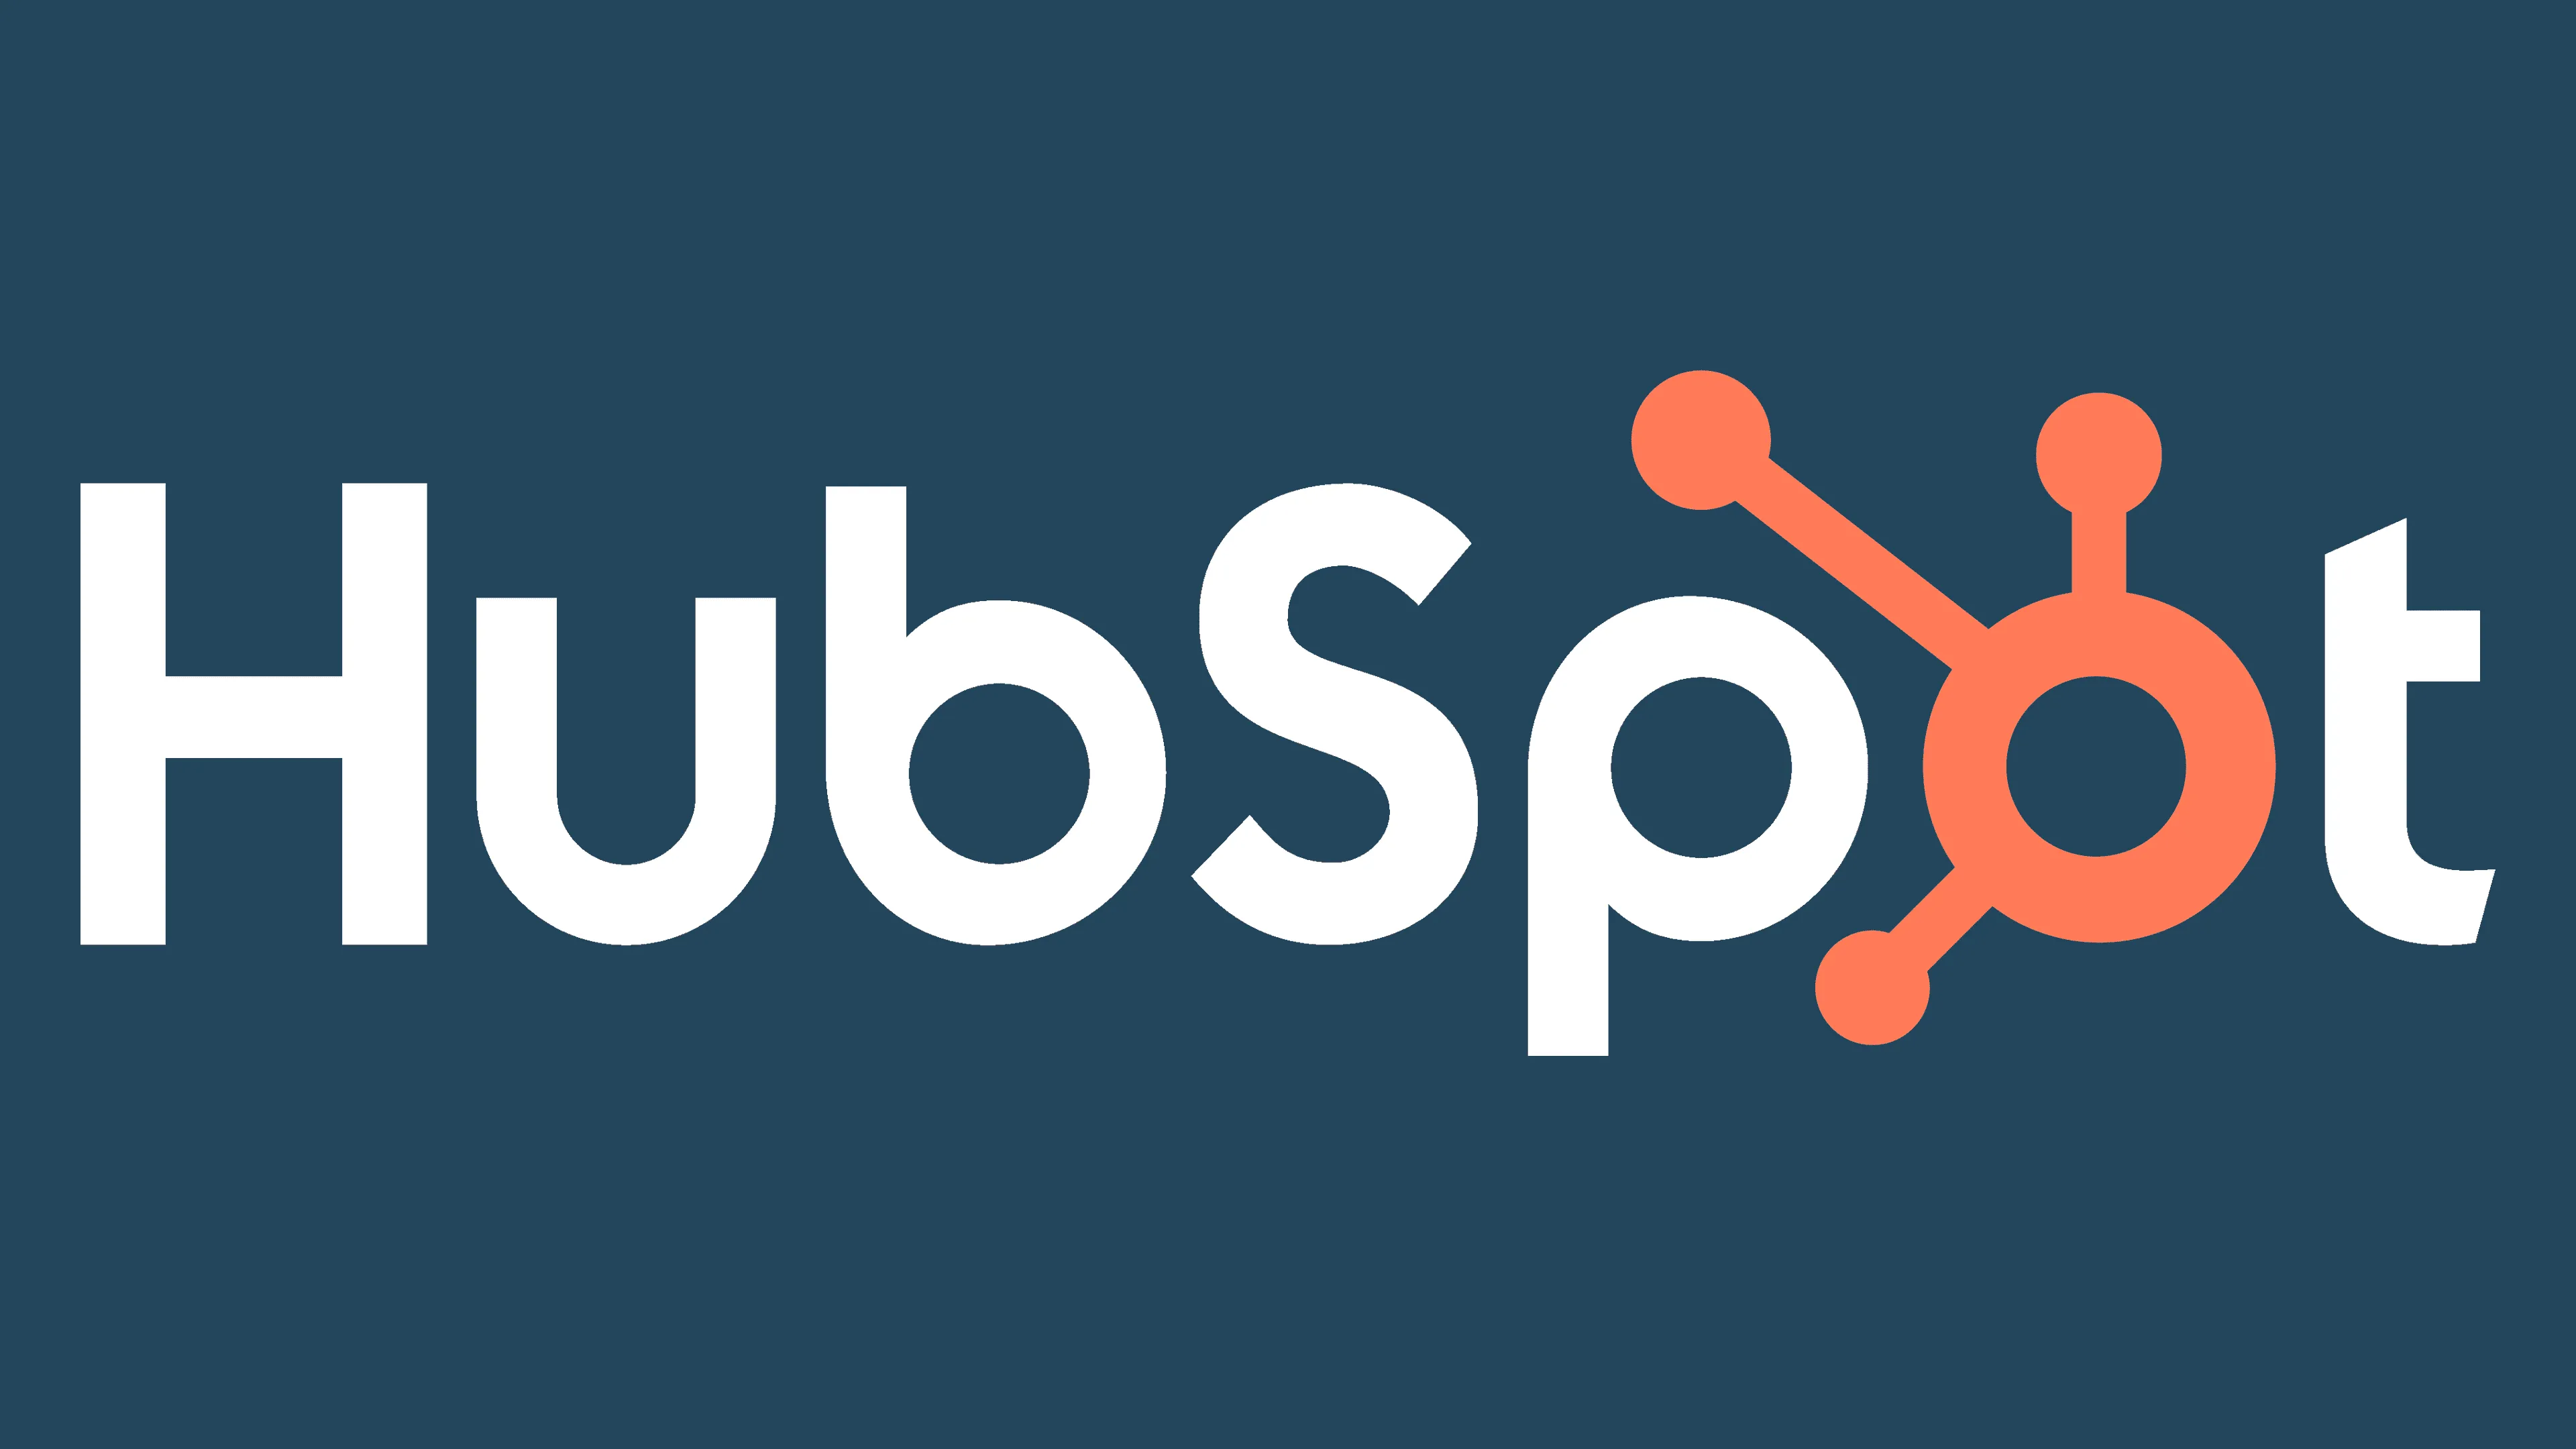 HubSpot - logo